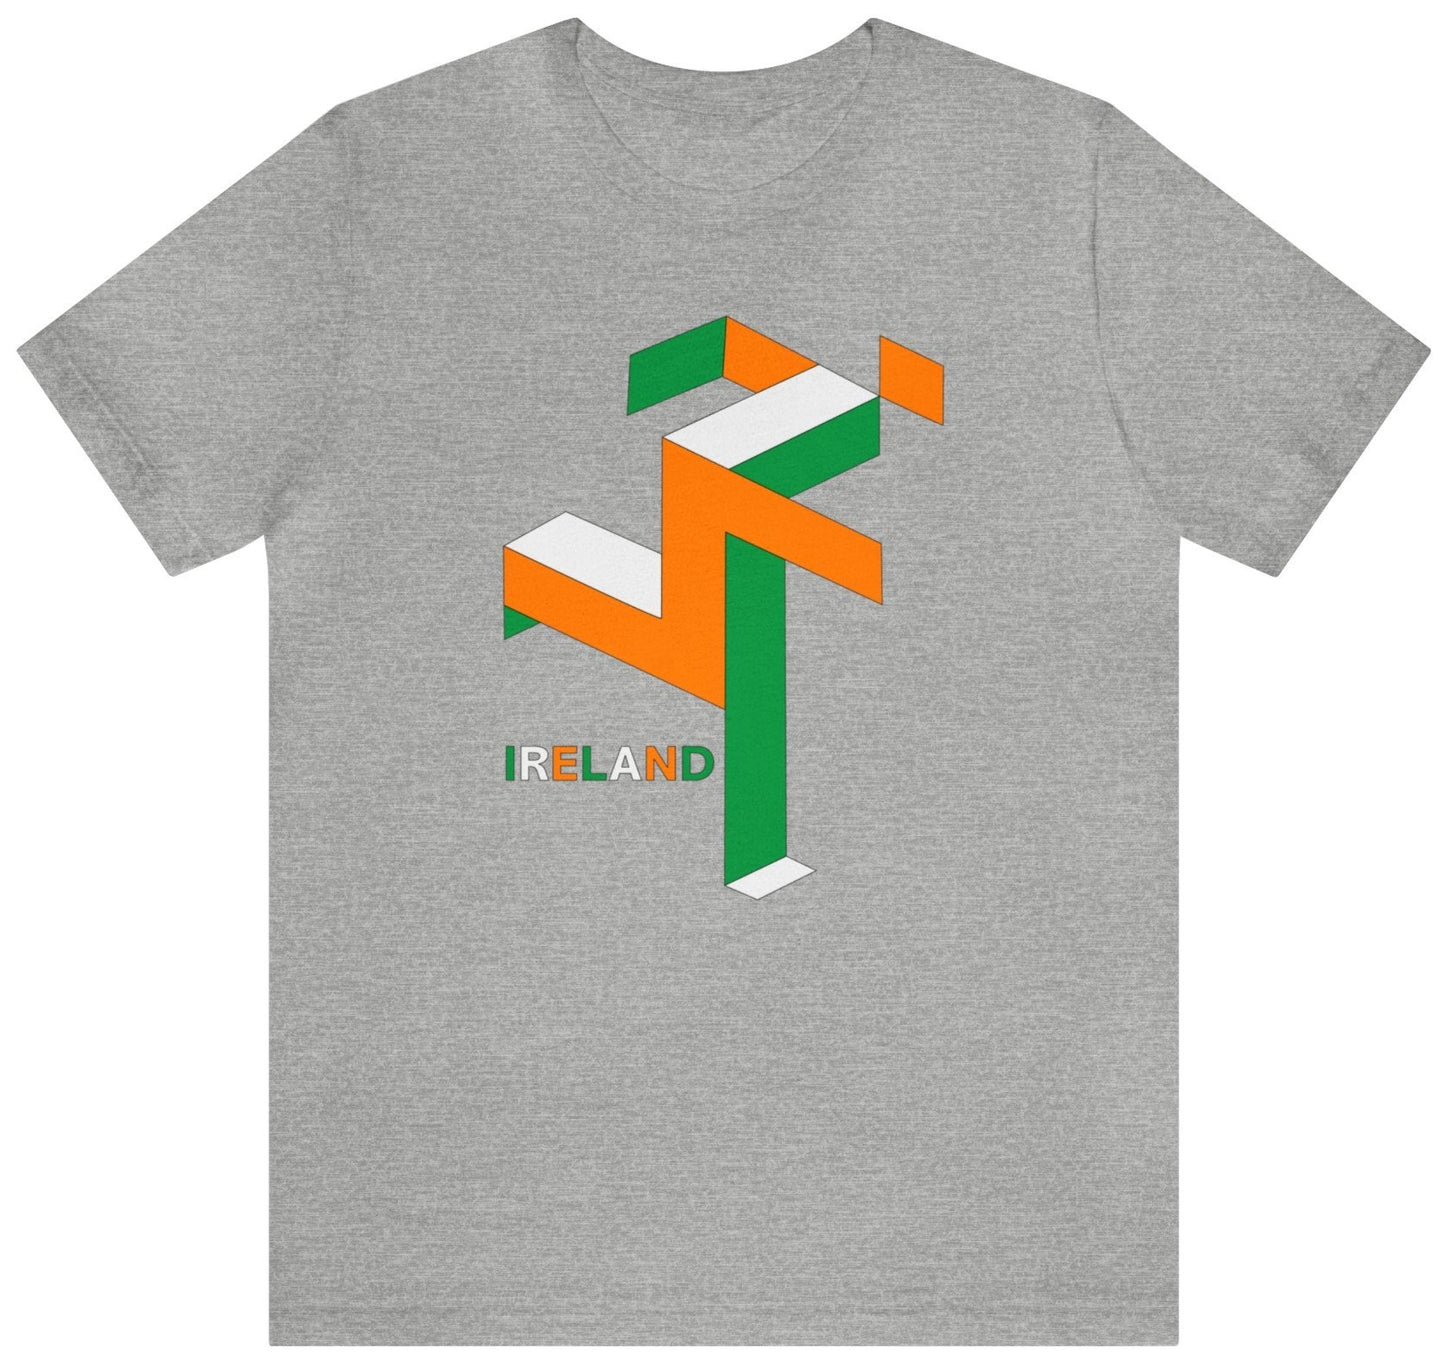 Ireland runner Olympics t shirt